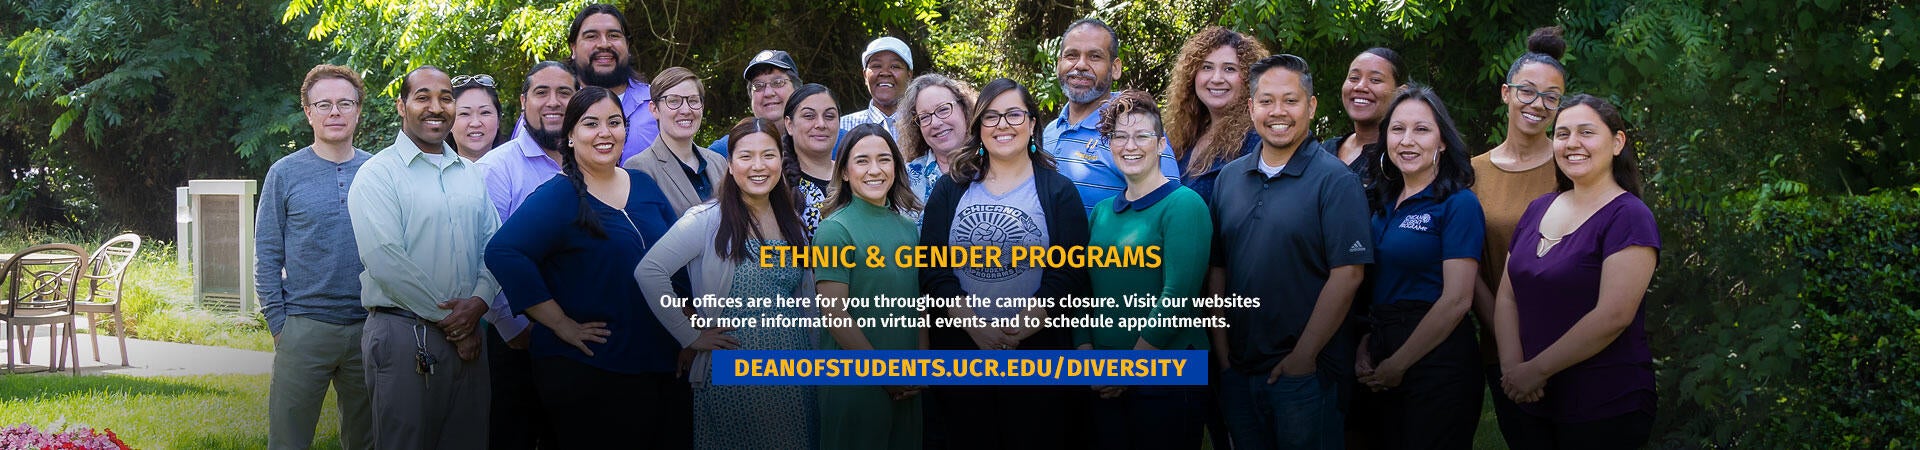 Ethnic & Gender Programs: DEANOFSTUDENTS.UCR.EDU/DIVERSITY